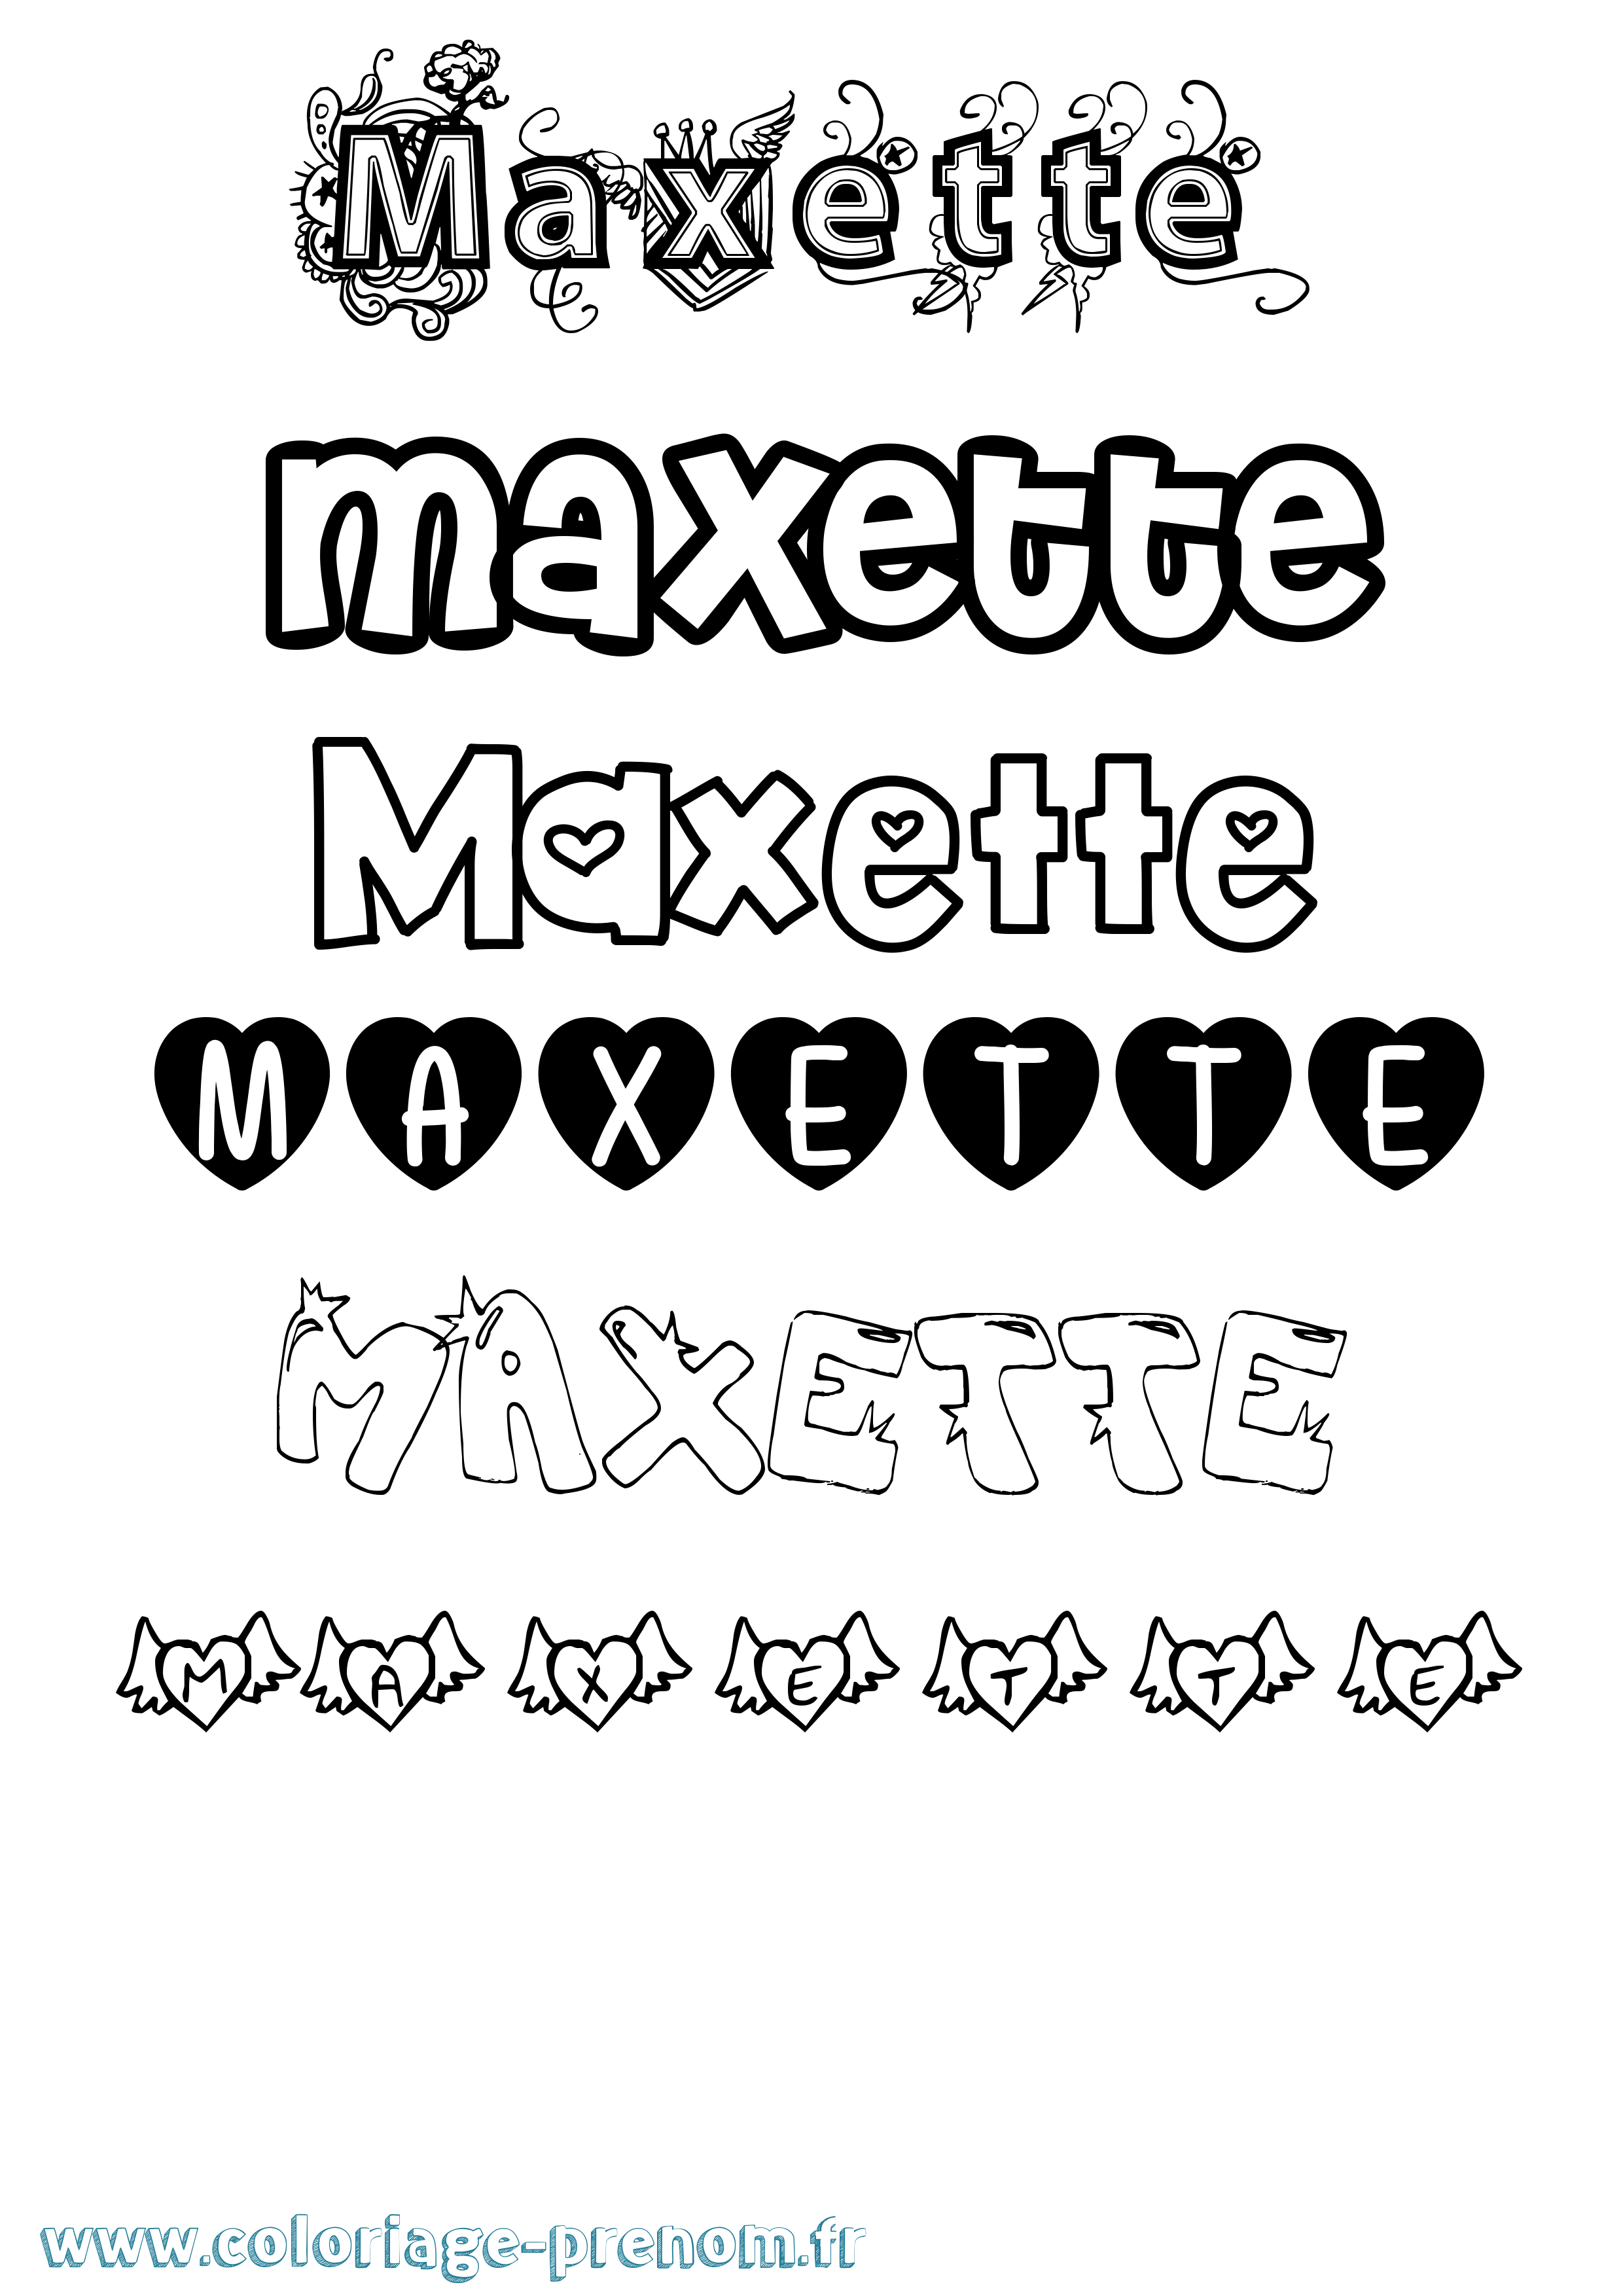 Coloriage prénom Maxette Girly